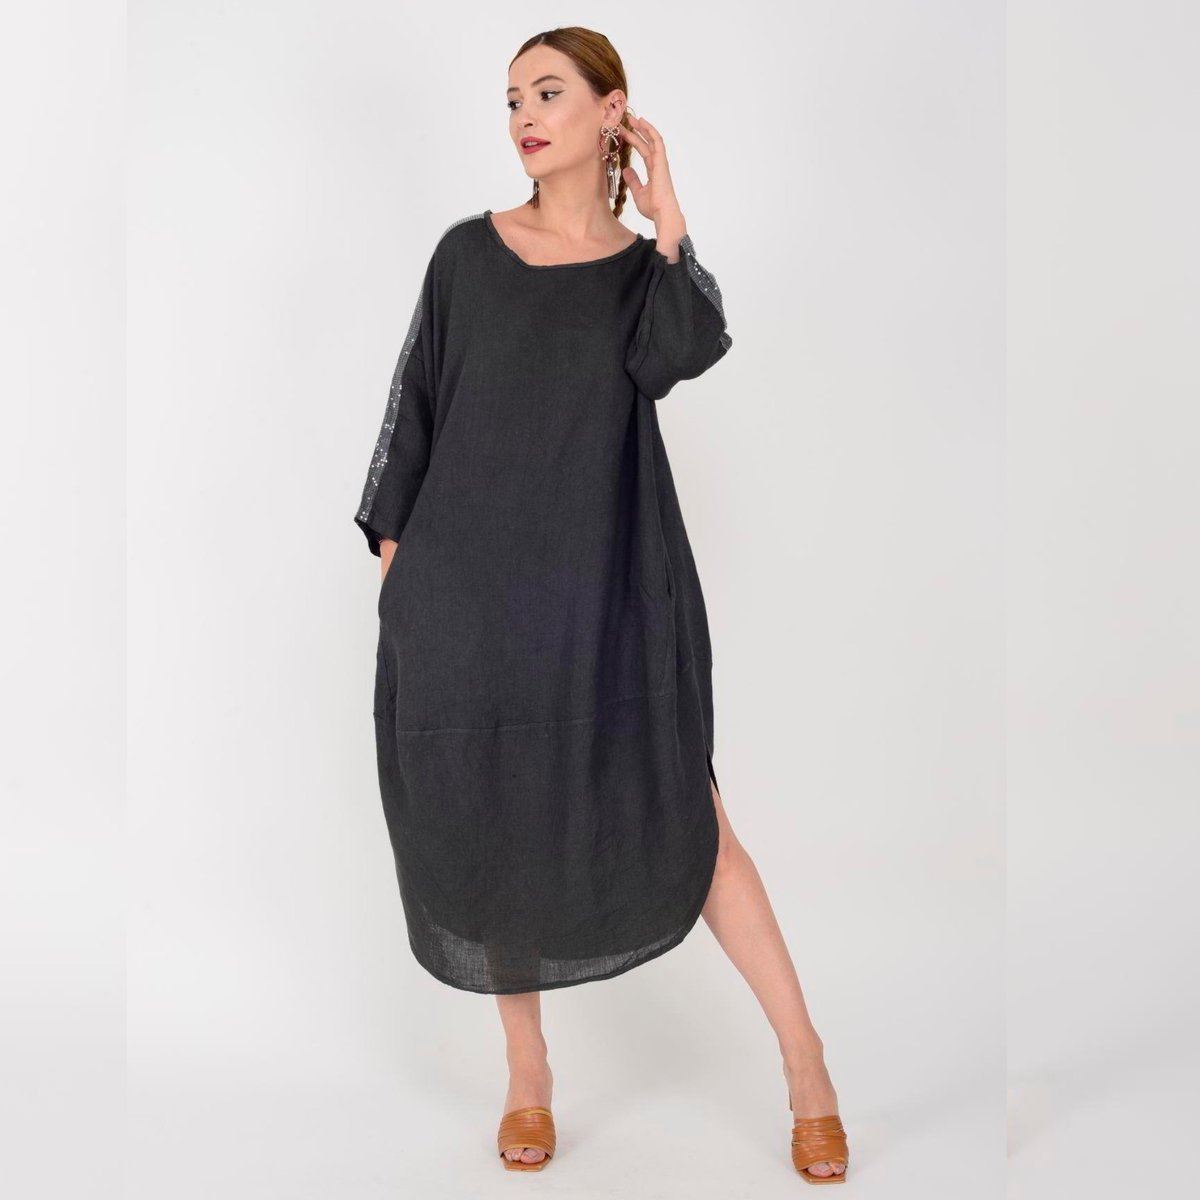 Linen Dresses for Women
😍👇
parparliboutique.etsy.com/listing/165737…

#plussize #flaxdress #dress #bestlinen #fashion #bohemian #onlineshop #casual #elegant #boho #ootd #gift #outfit #clothing #casualdress #maxidress #usa🇺🇸 #unitedkingdom🇬🇧 #nederland🇳🇱 #germany🇩🇪 #canada🇨🇦 #linenclothing